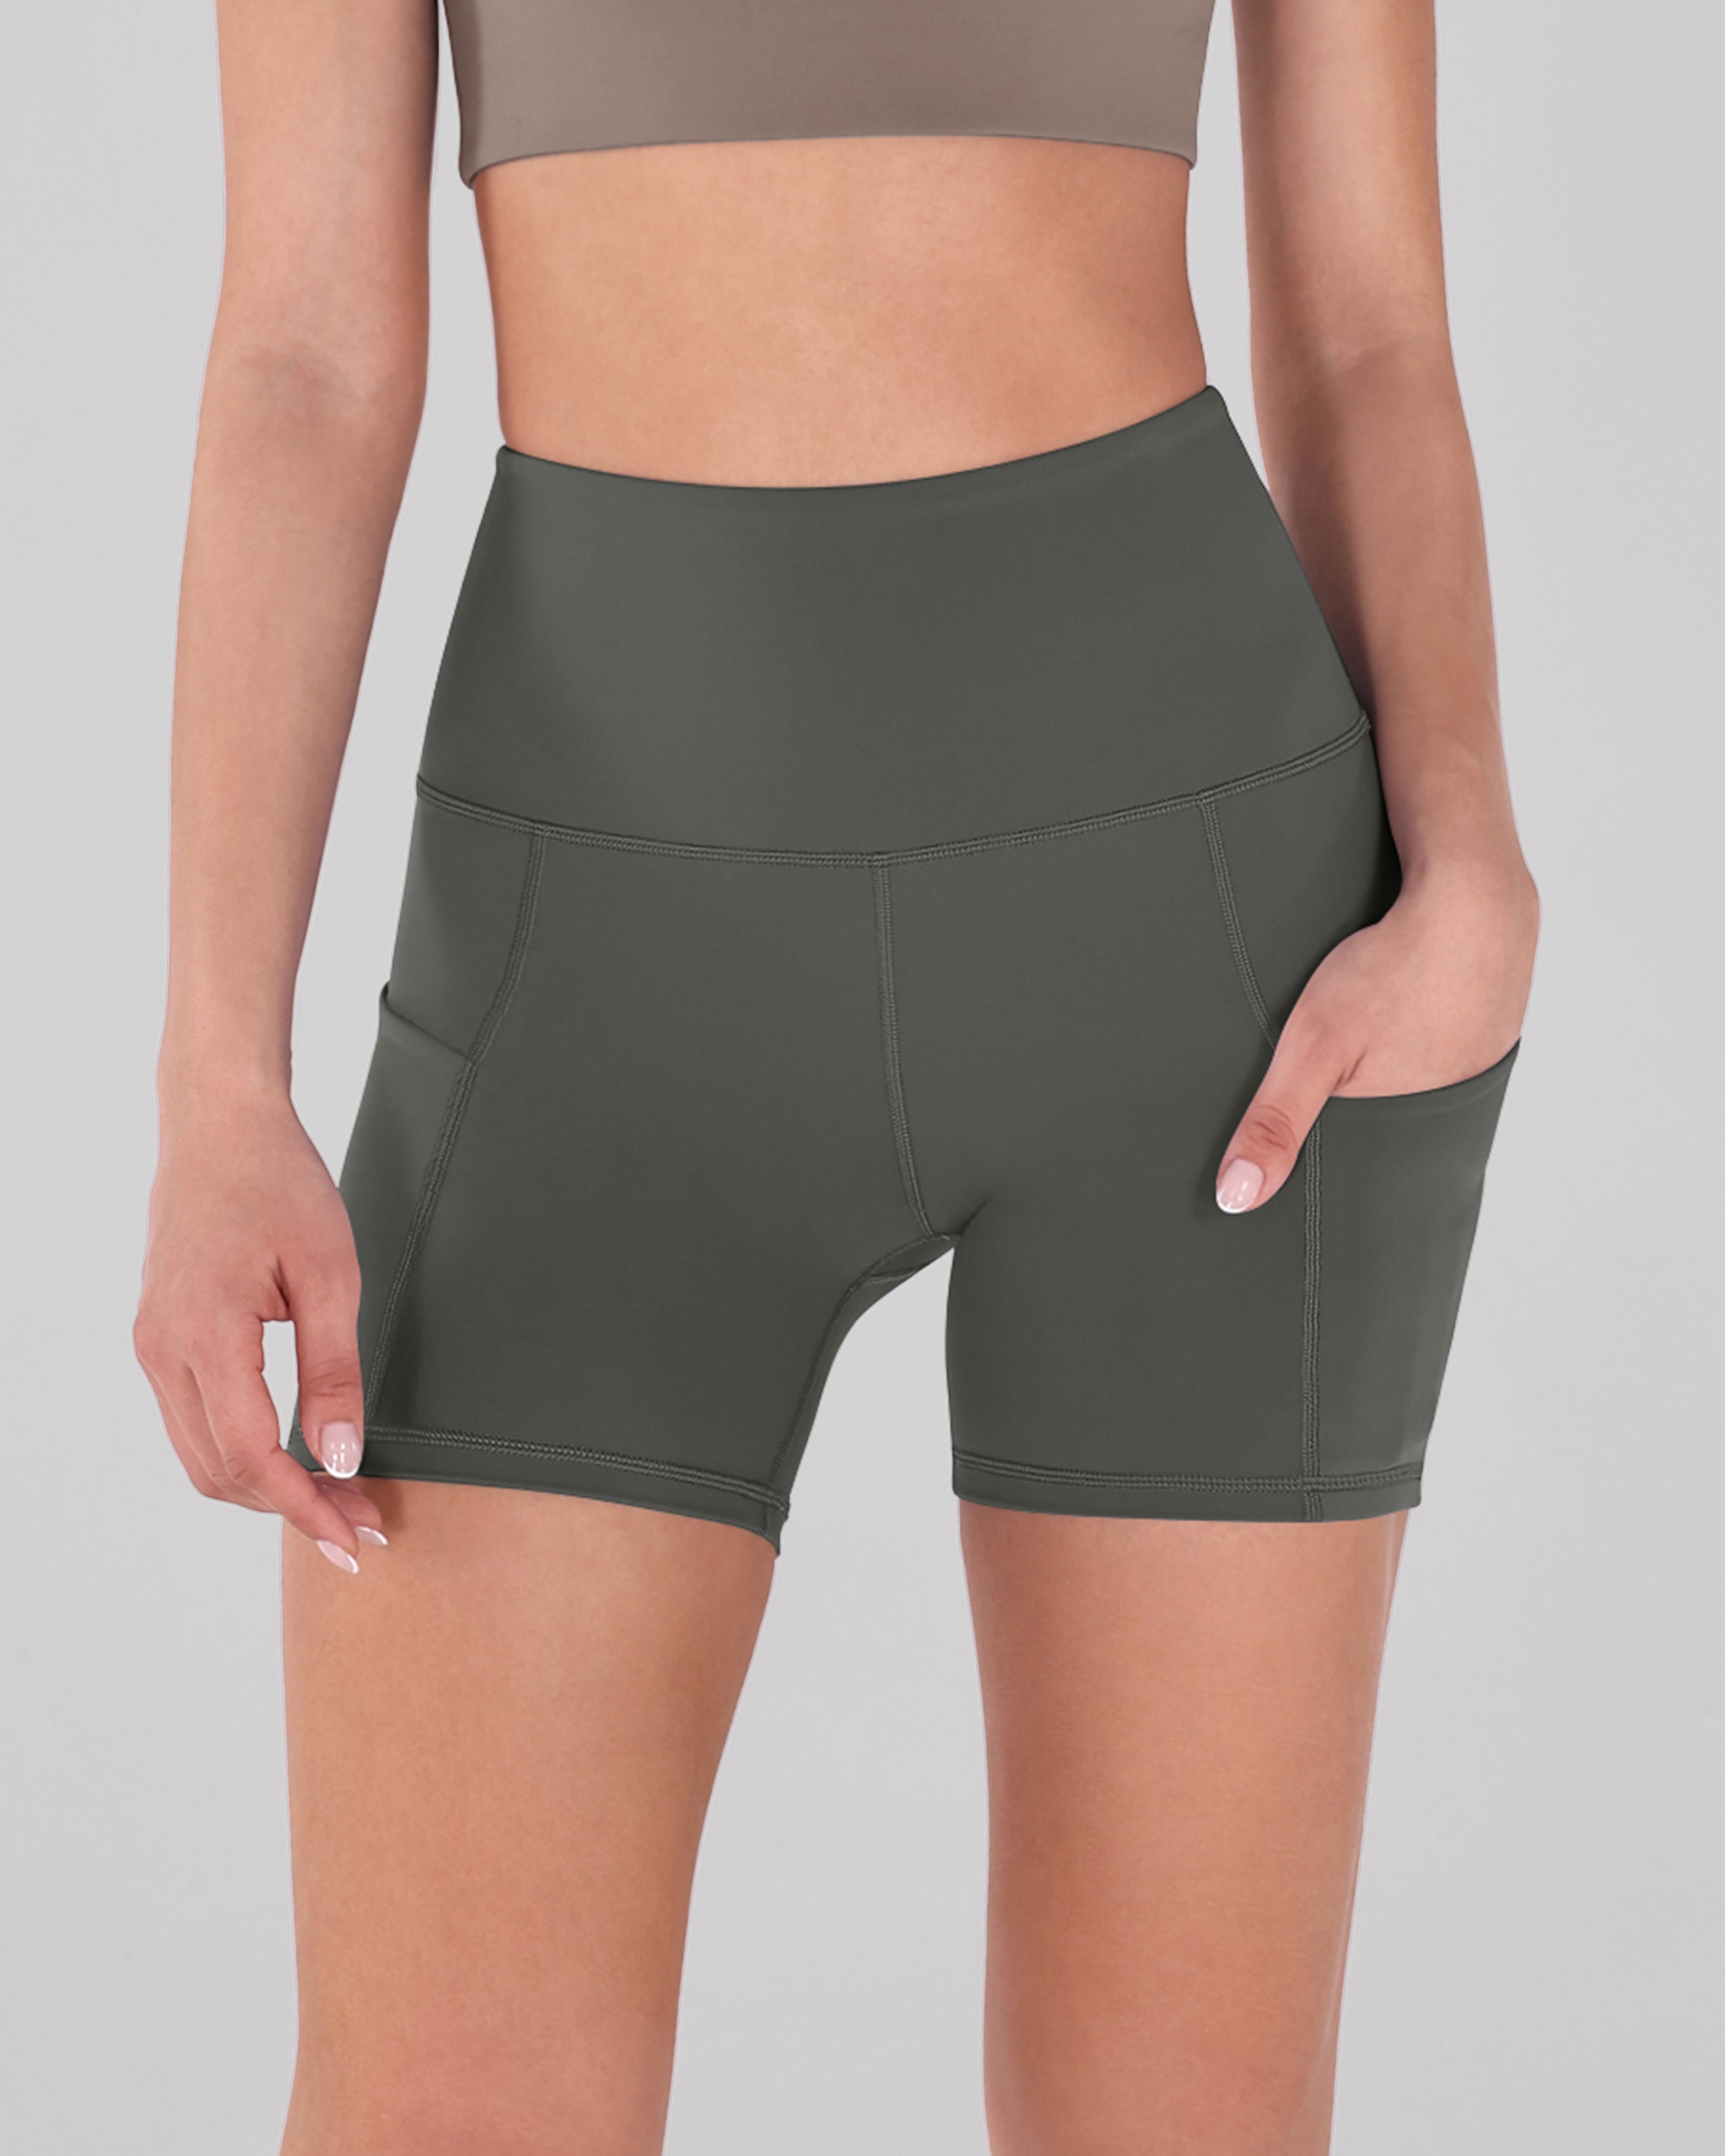 5" High Waist Tummy Control Shorts with Pockets Charcoal - ododos